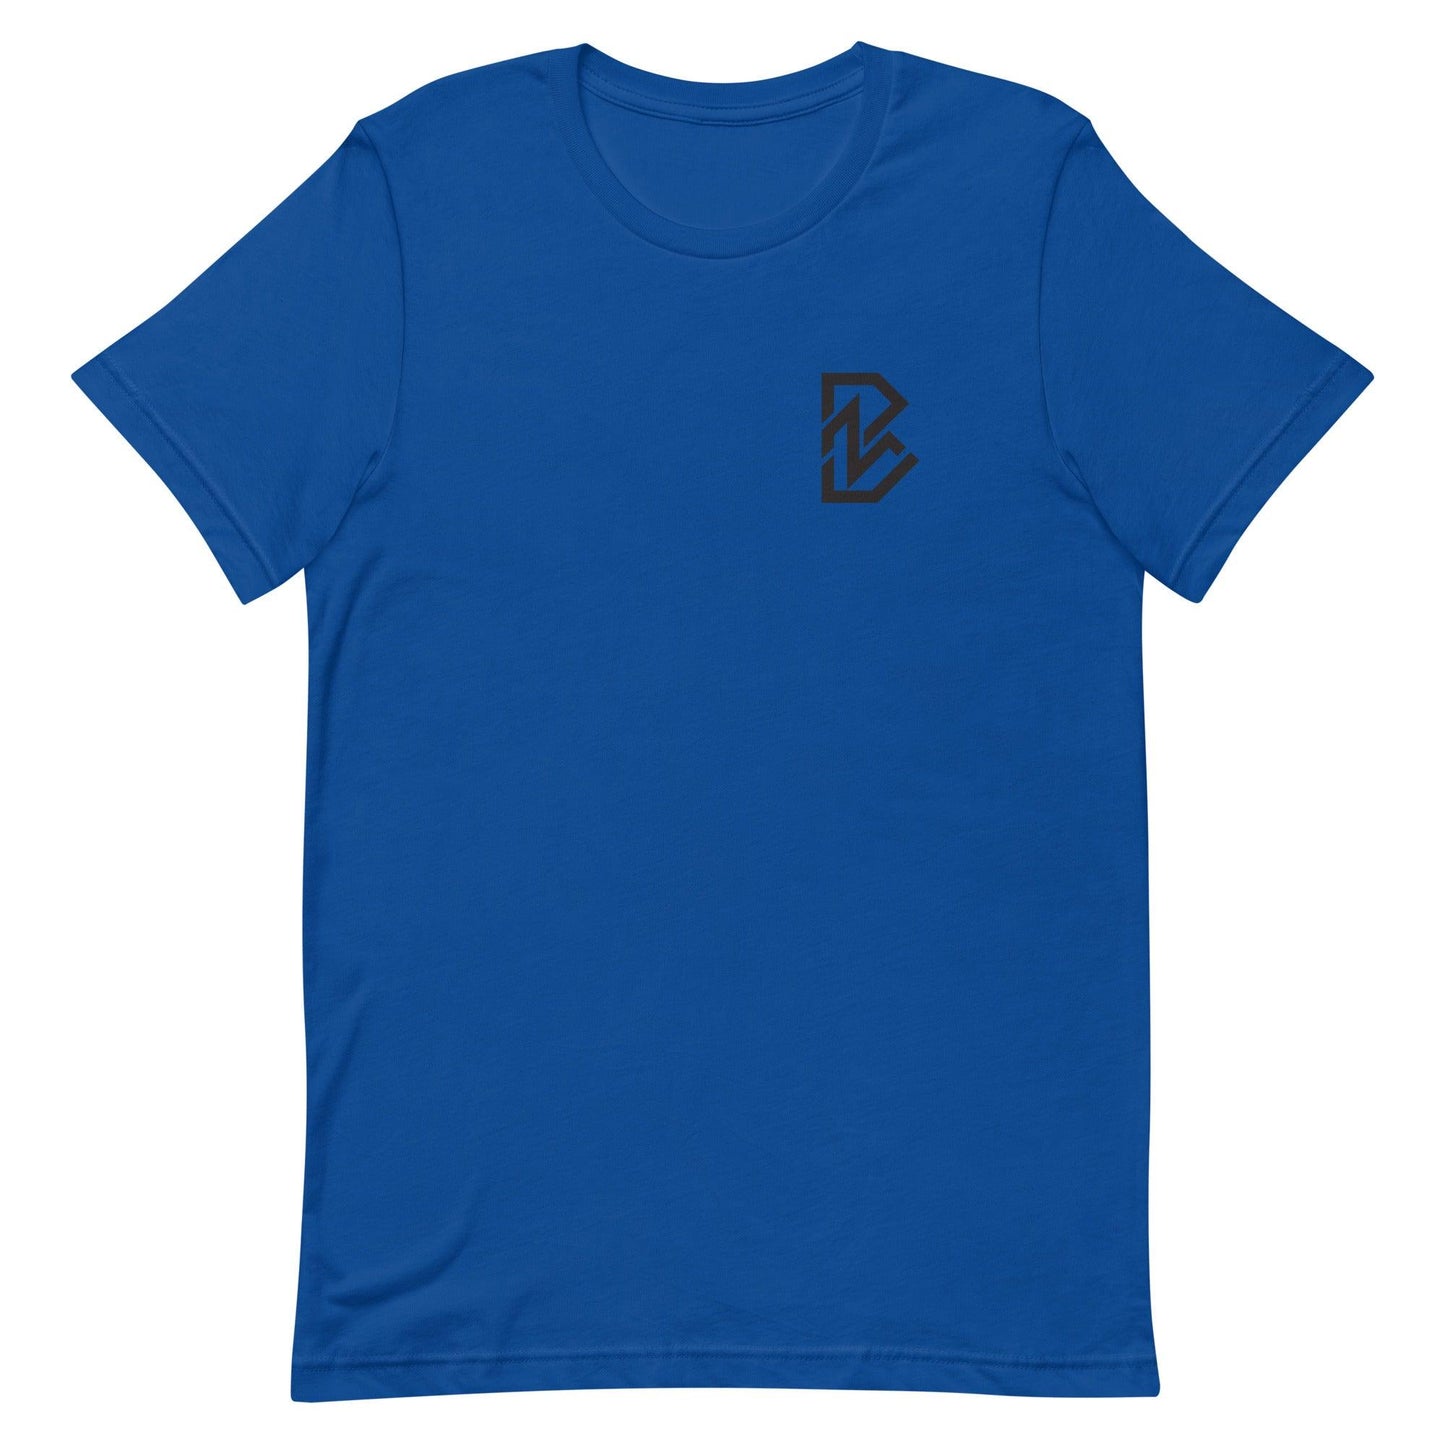 Brandon Neely “Basics” t-shirt - Fan Arch